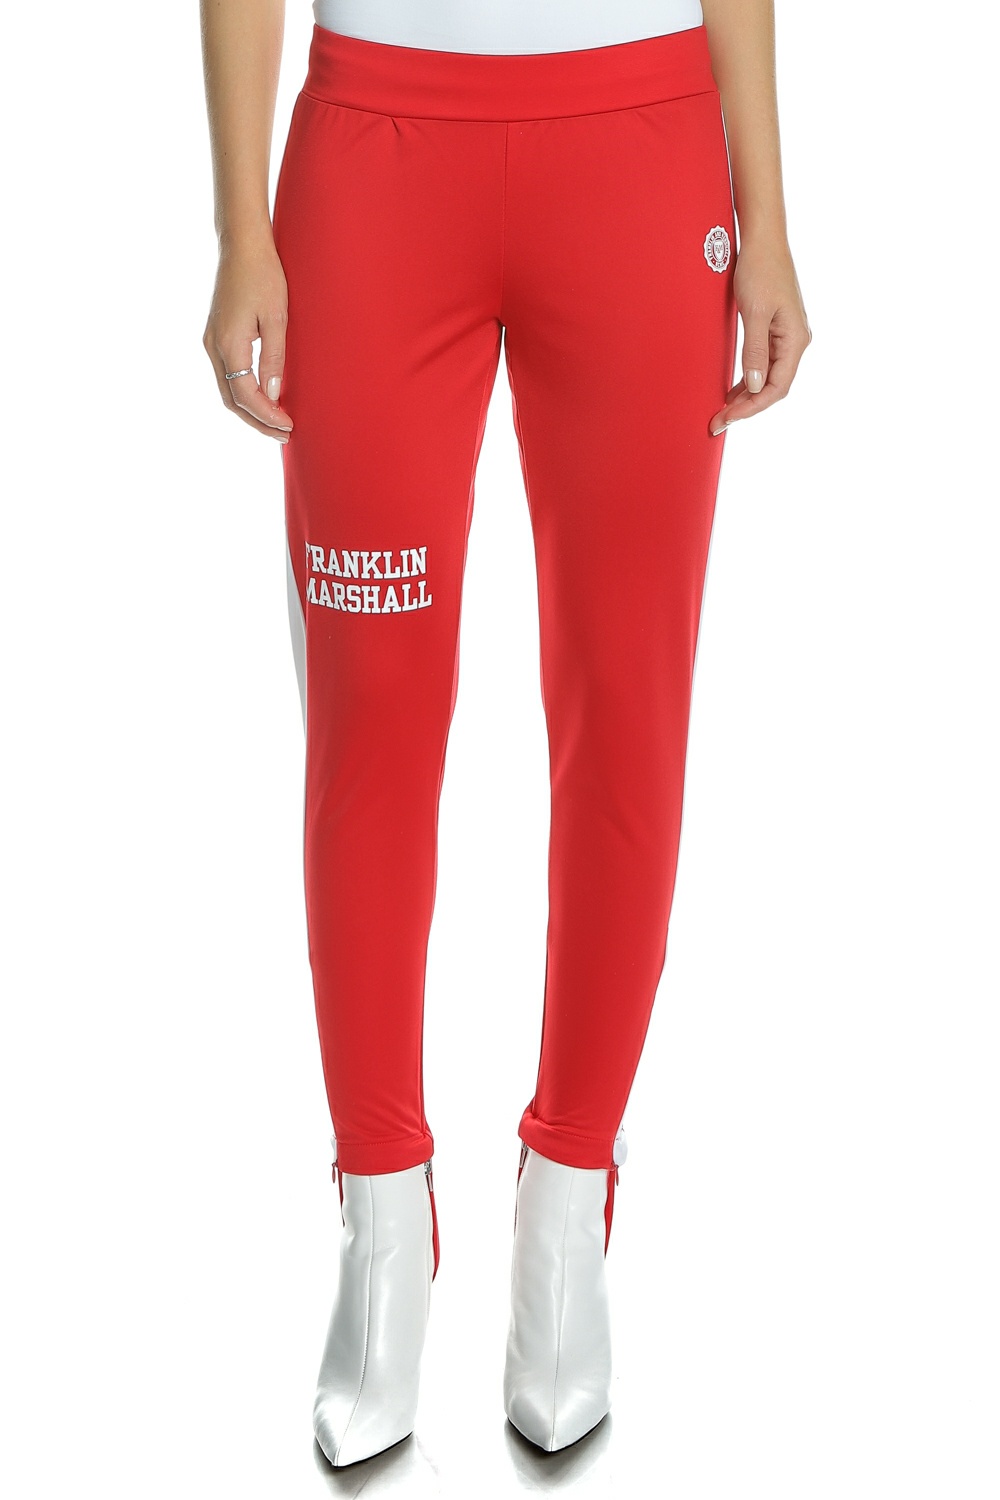 FRANKLIN & MARSHALL - Γυναικείο παντελόνι φόρμας FRANKLIN & MARSHALL κόκκινο Γυναικεία/Ρούχα/Αθλητικά/Φόρμες